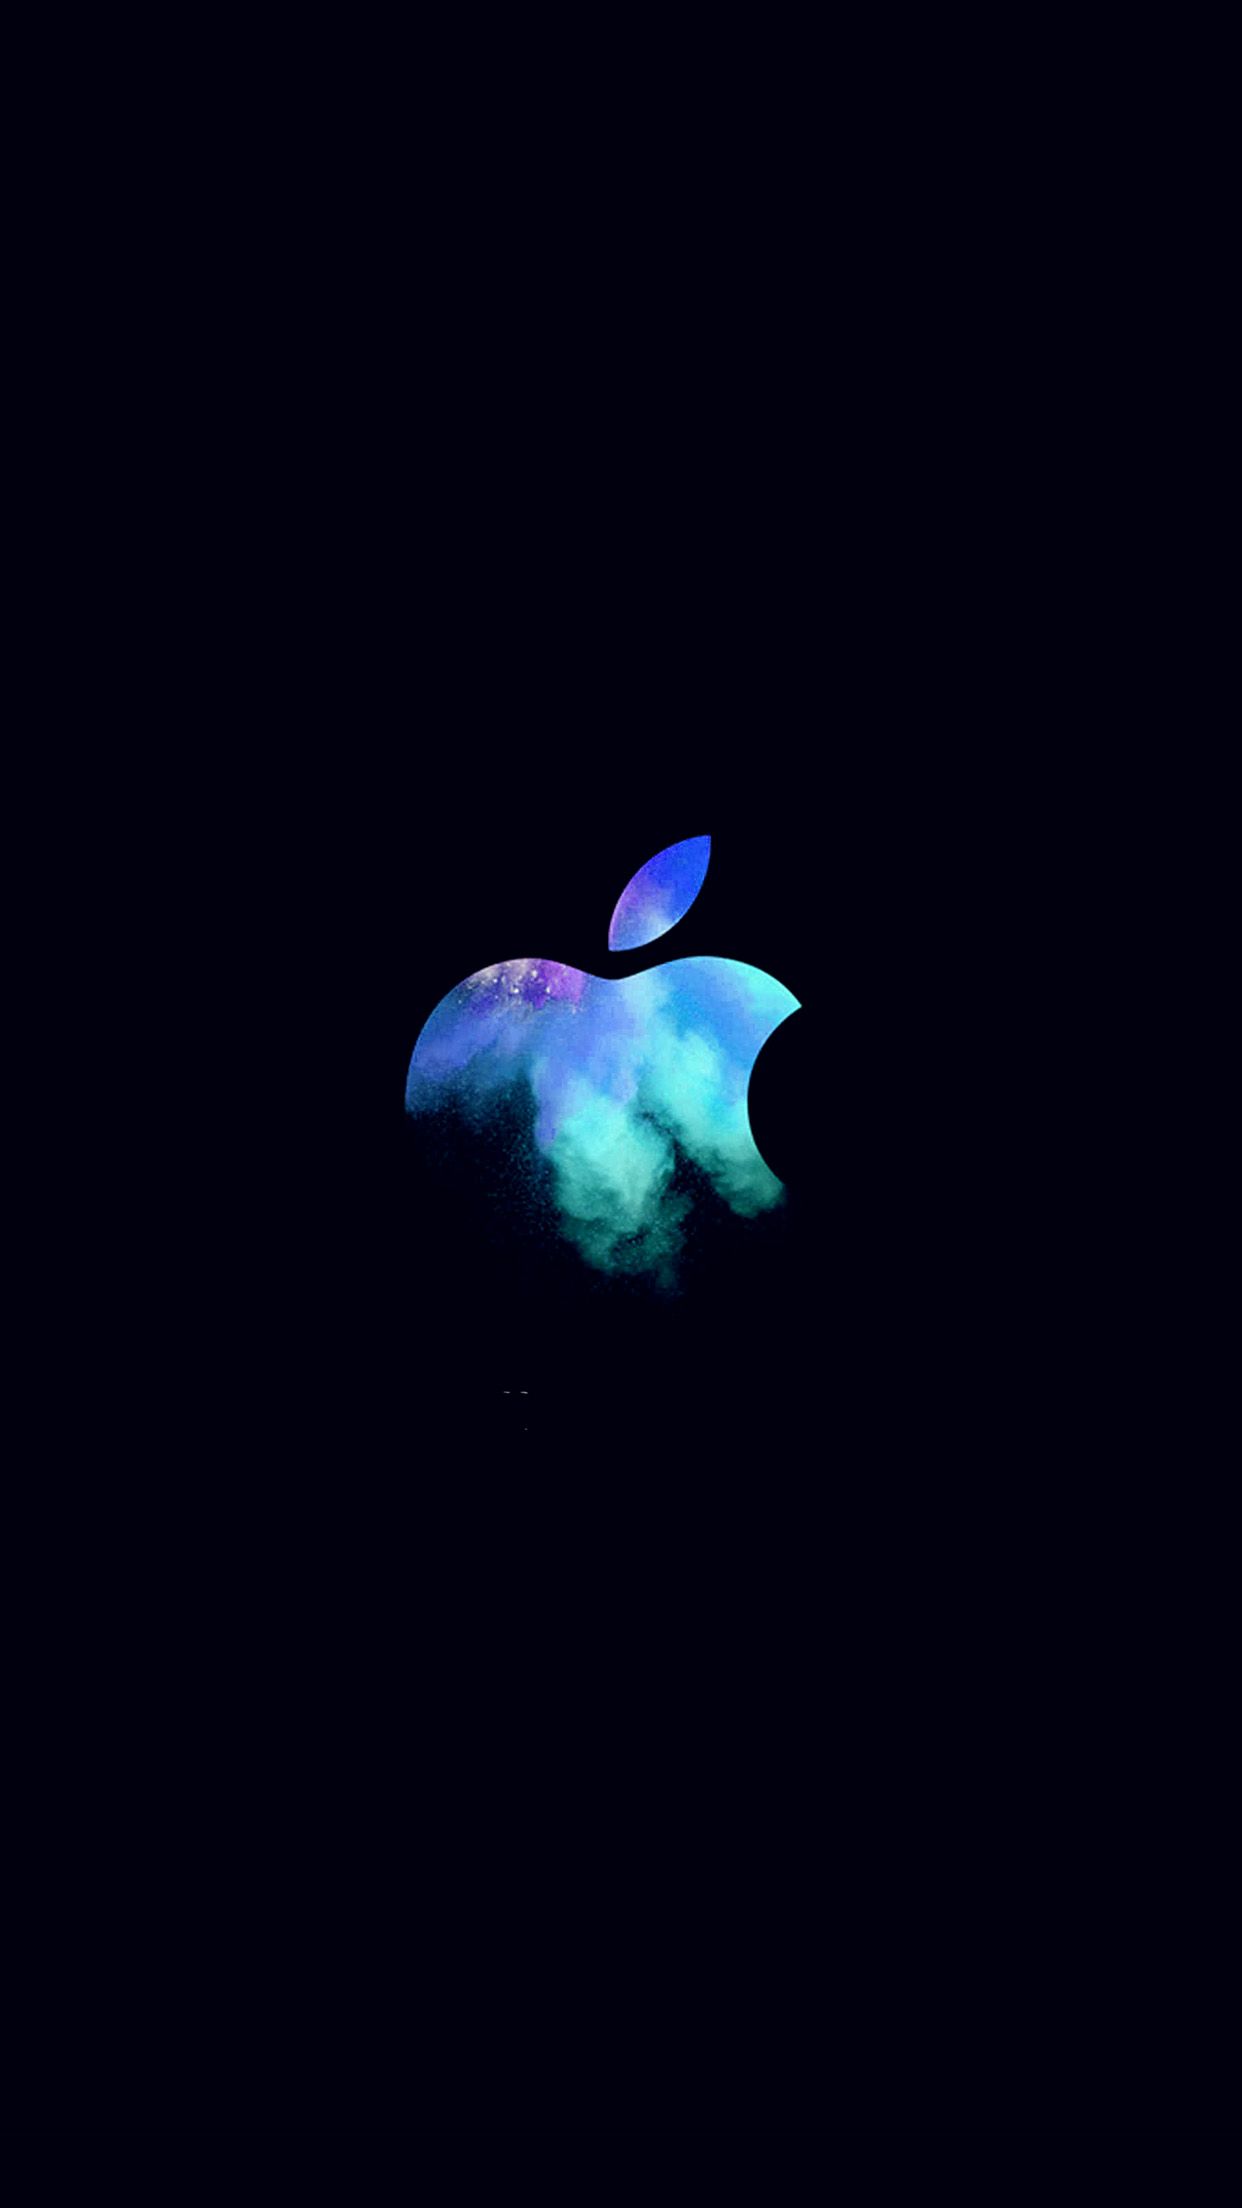 Apple Mac Event Logo Dark Illustration Art Blue iPhone 8 Wallpaper Free Download